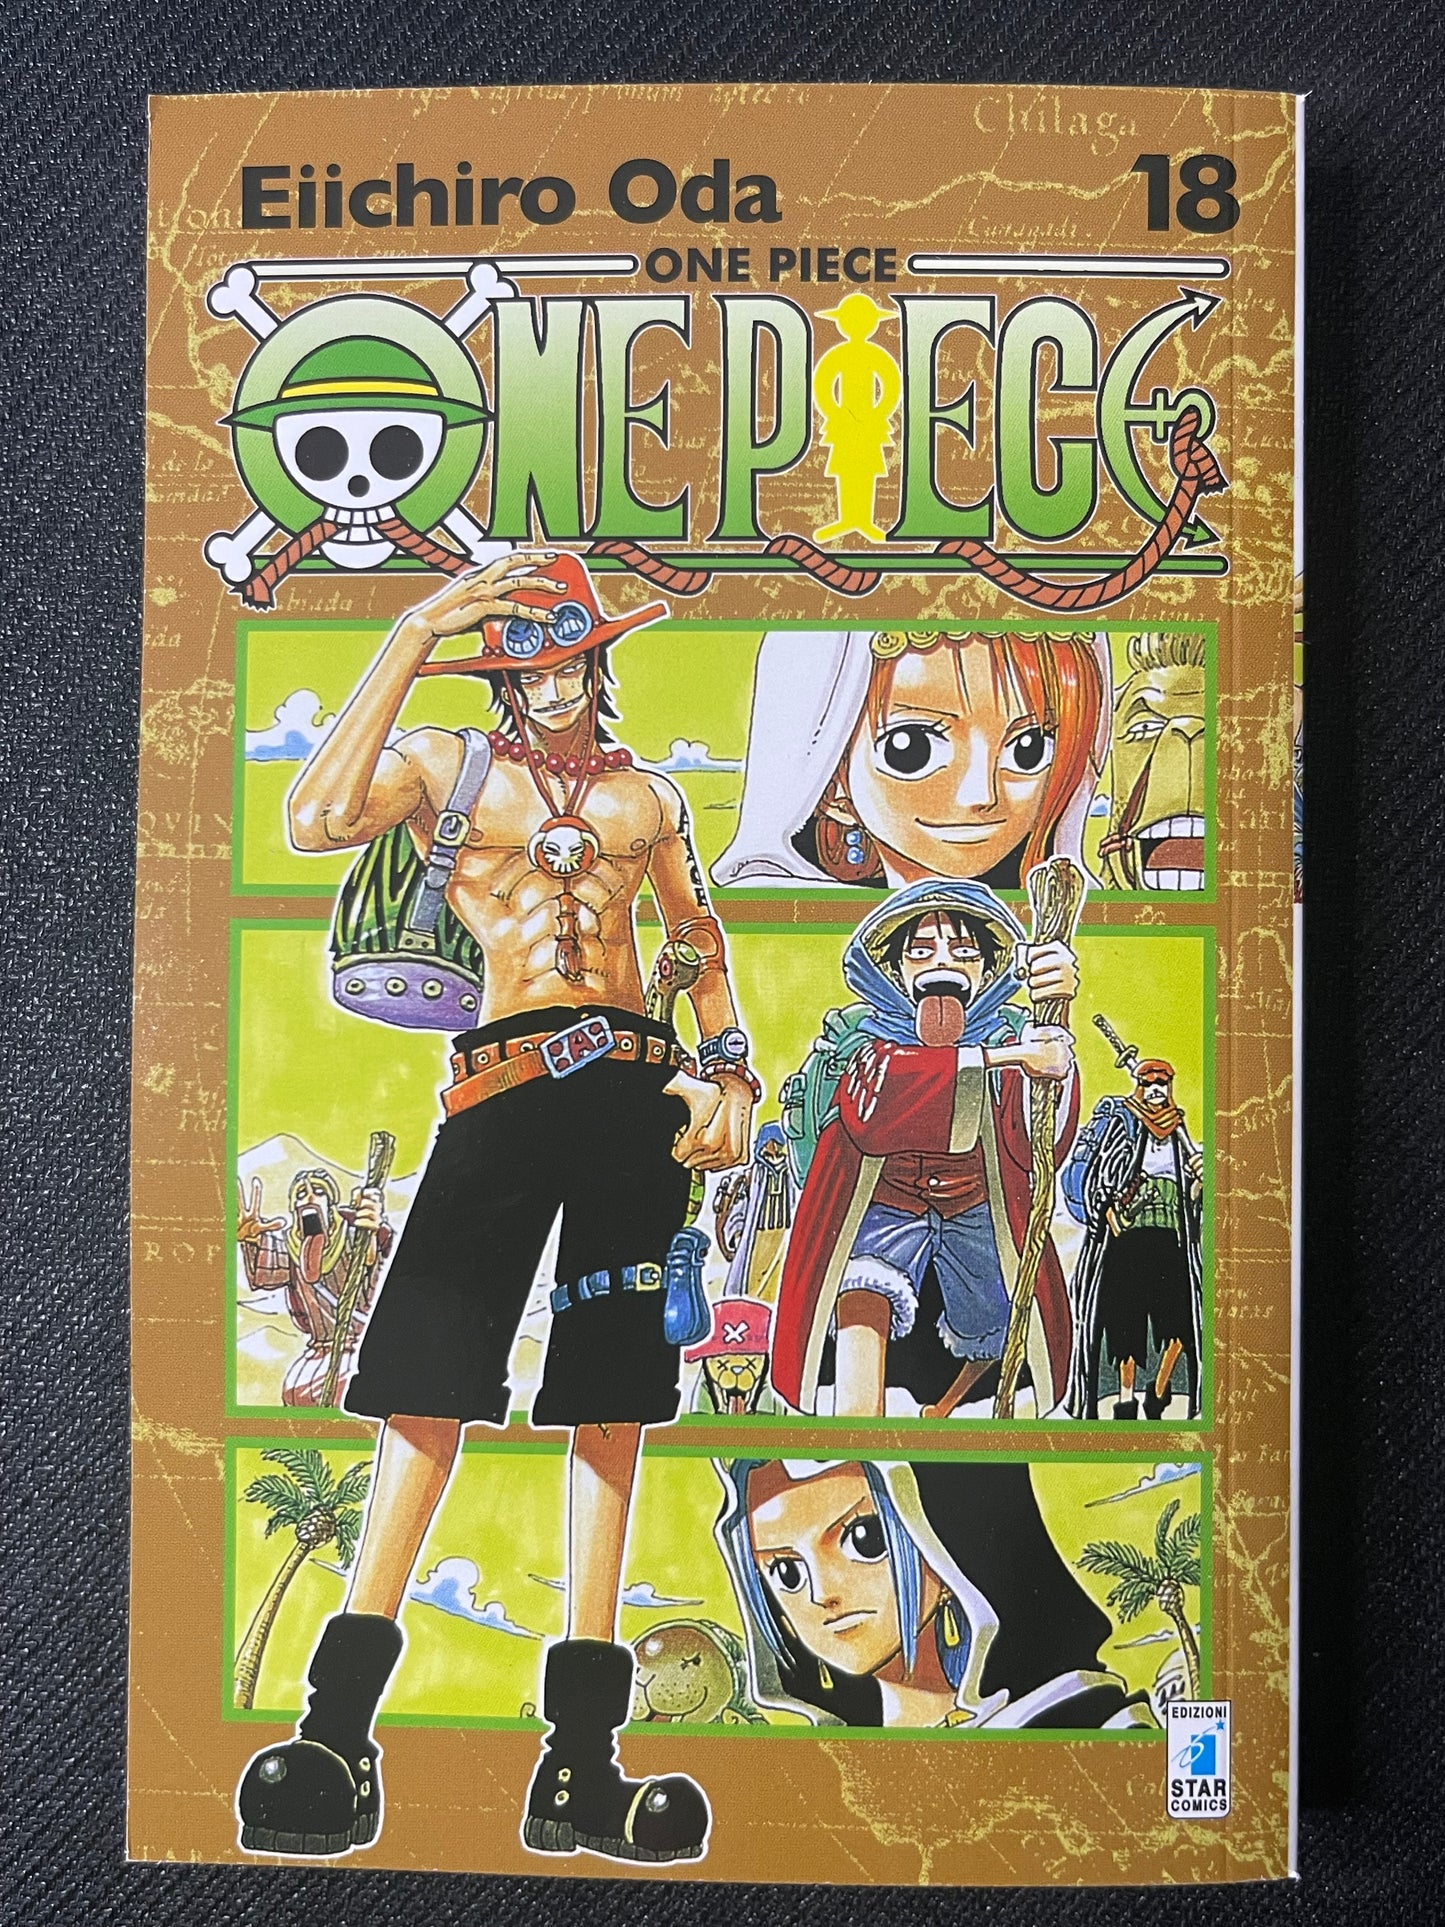 One Piece Vol. 18